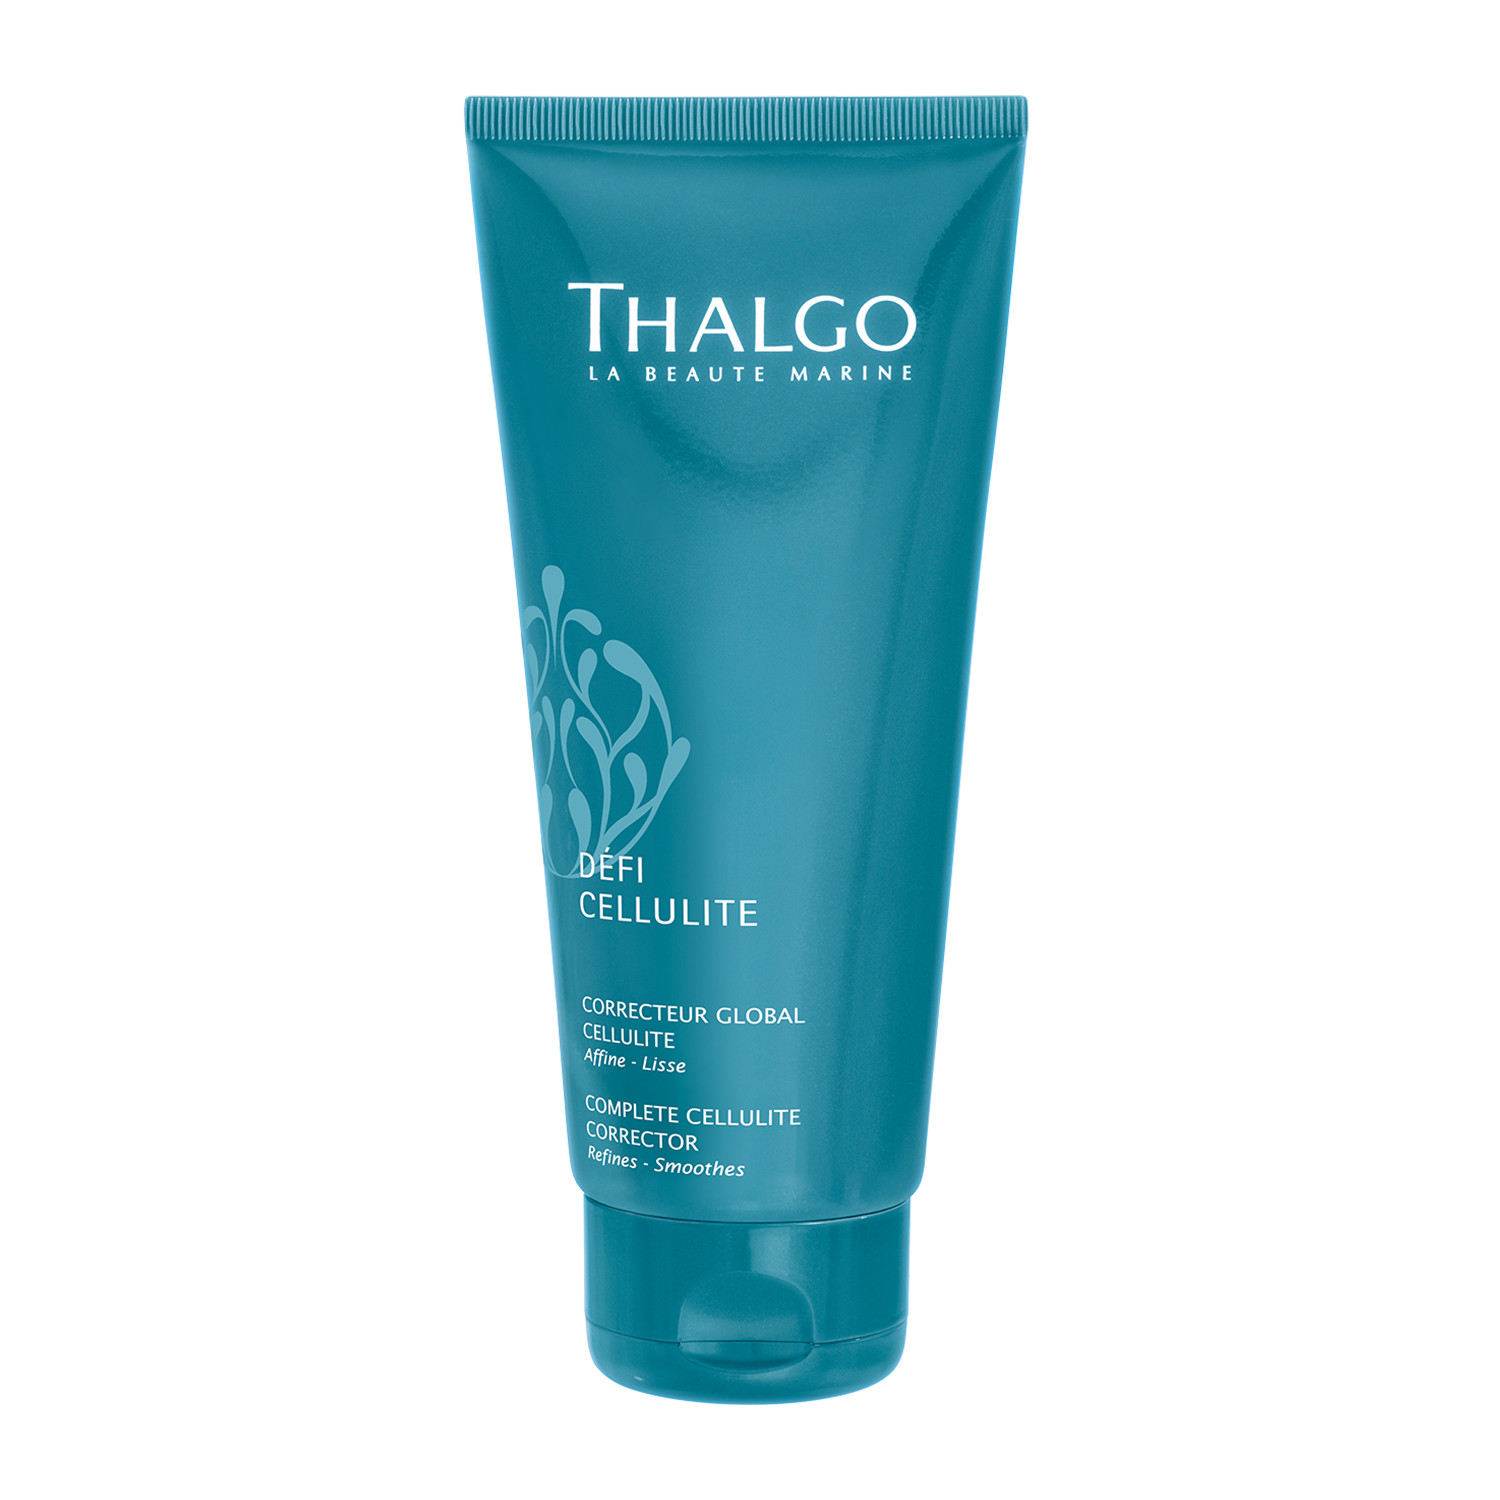 Відгуки про Thalgo Defi Cellulite Complete Cellulite Corrector Корректирующий крем против всех видов целлюлита